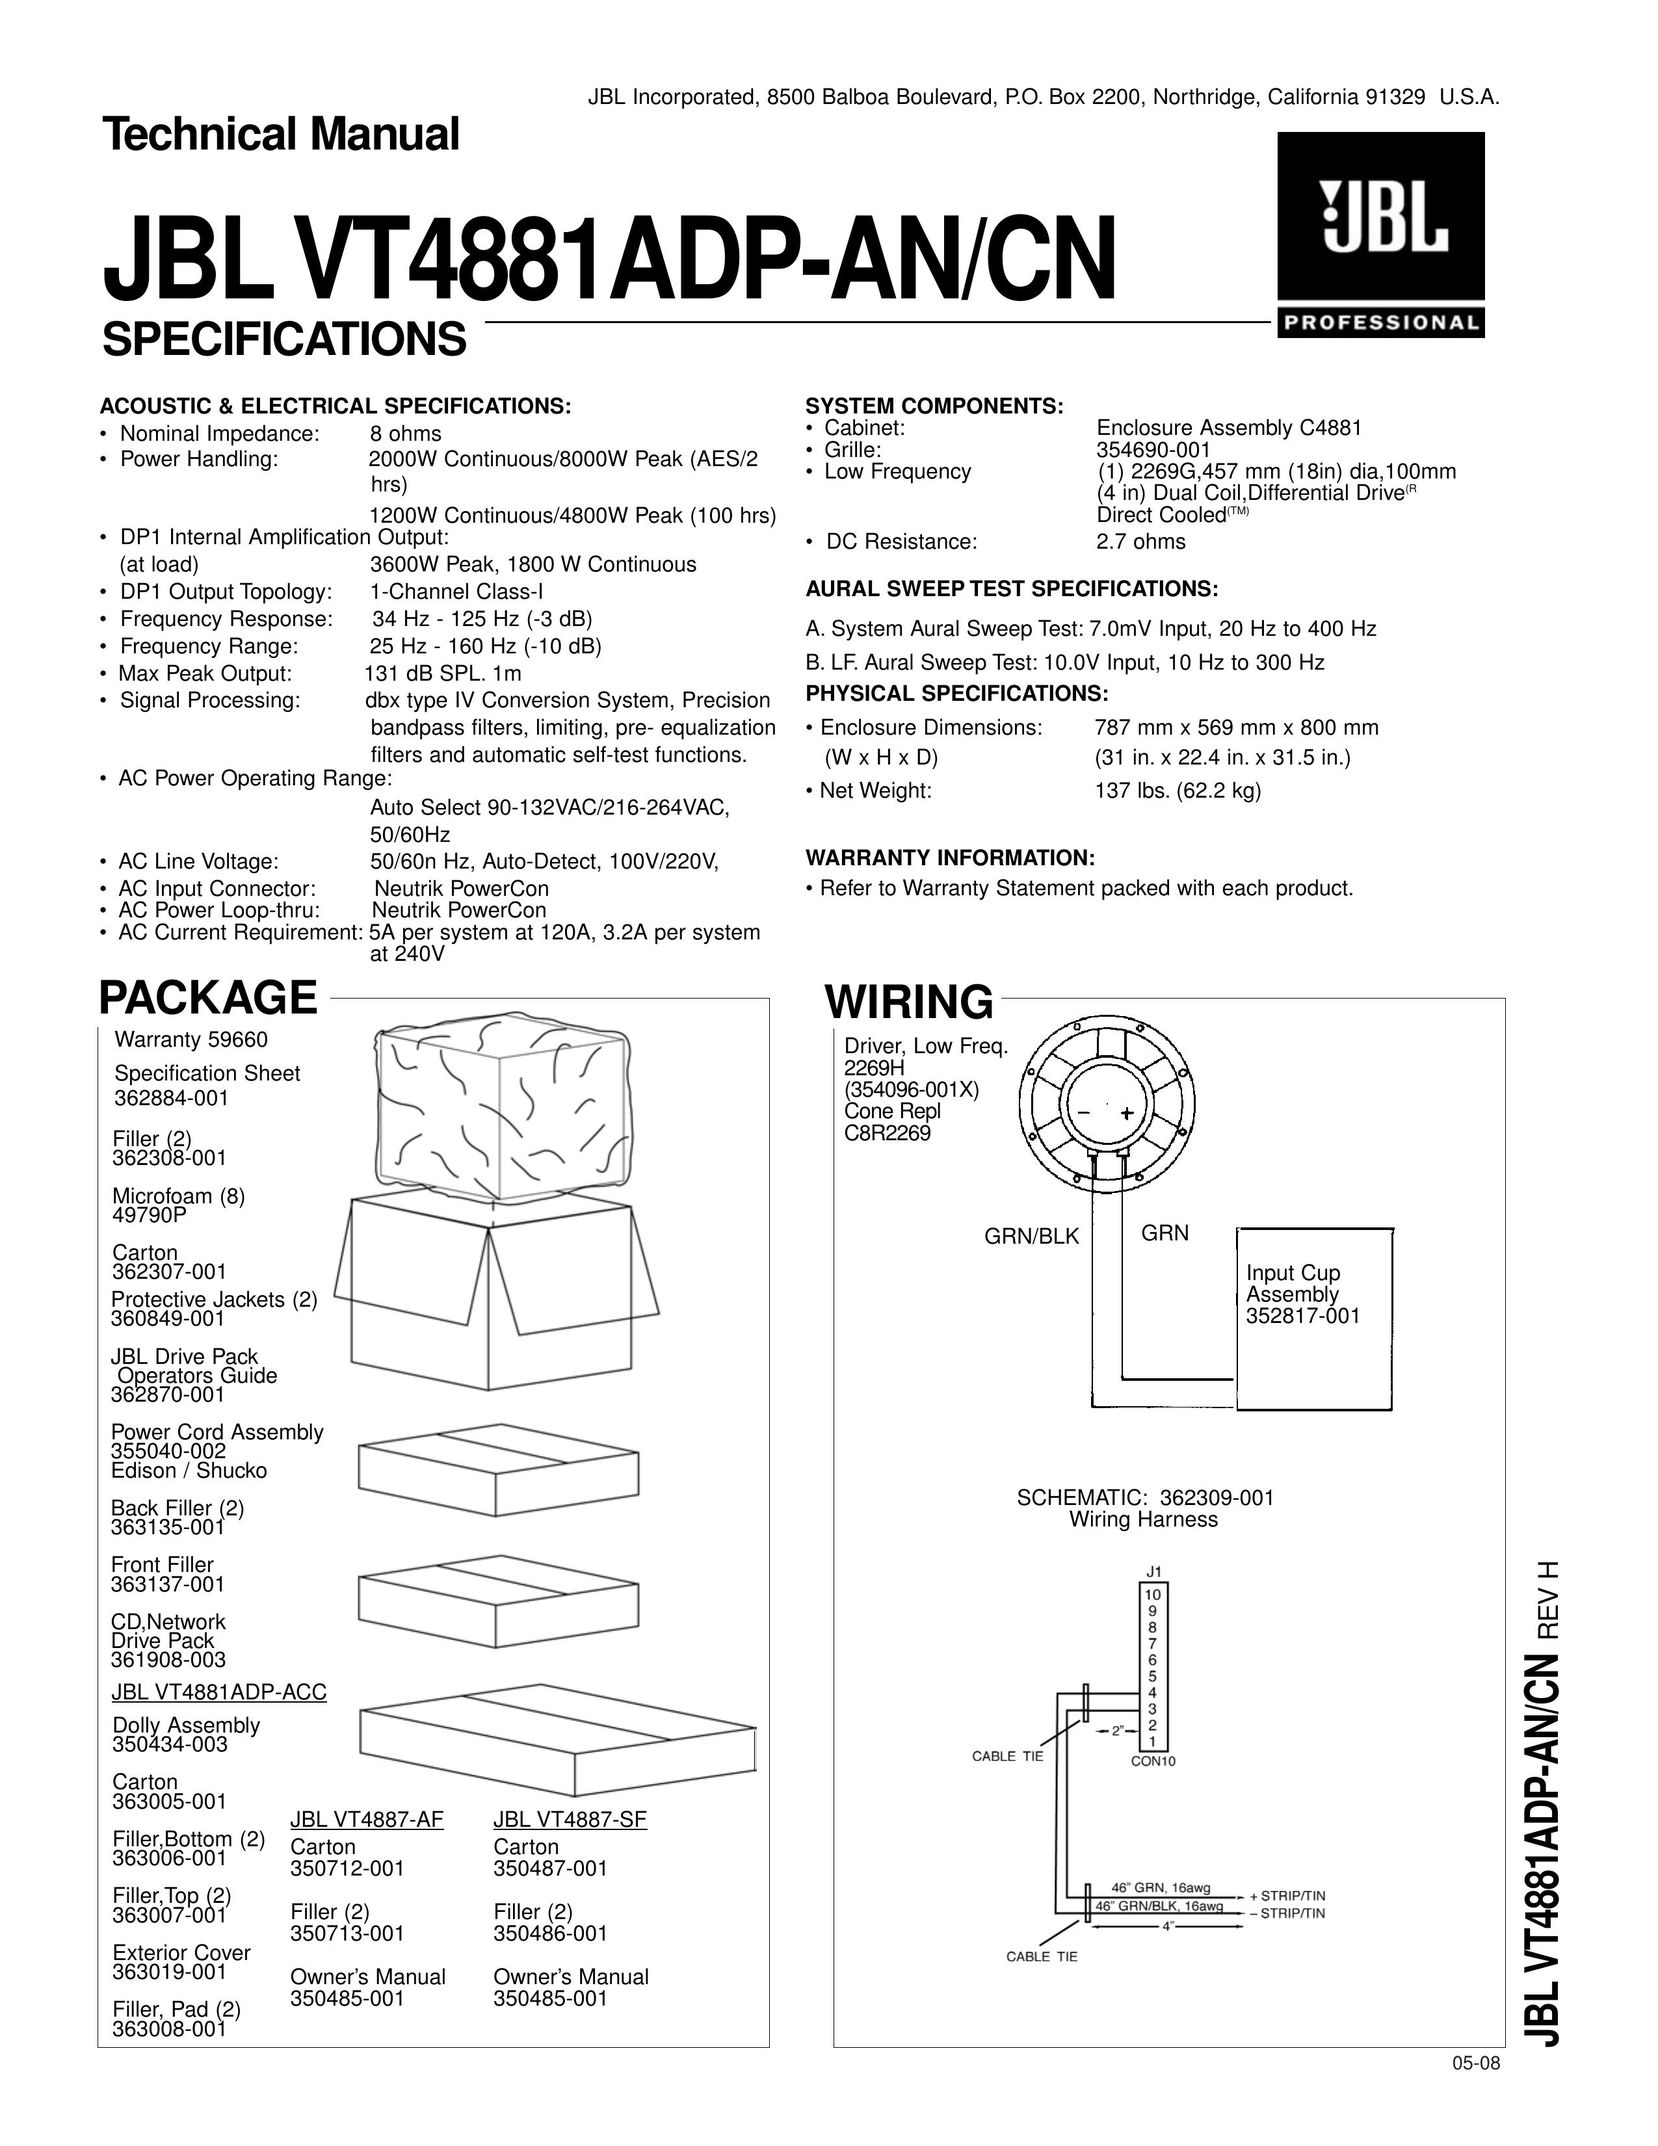 JBL VT4881ADP-AN/CN Stereo Amplifier User Manual